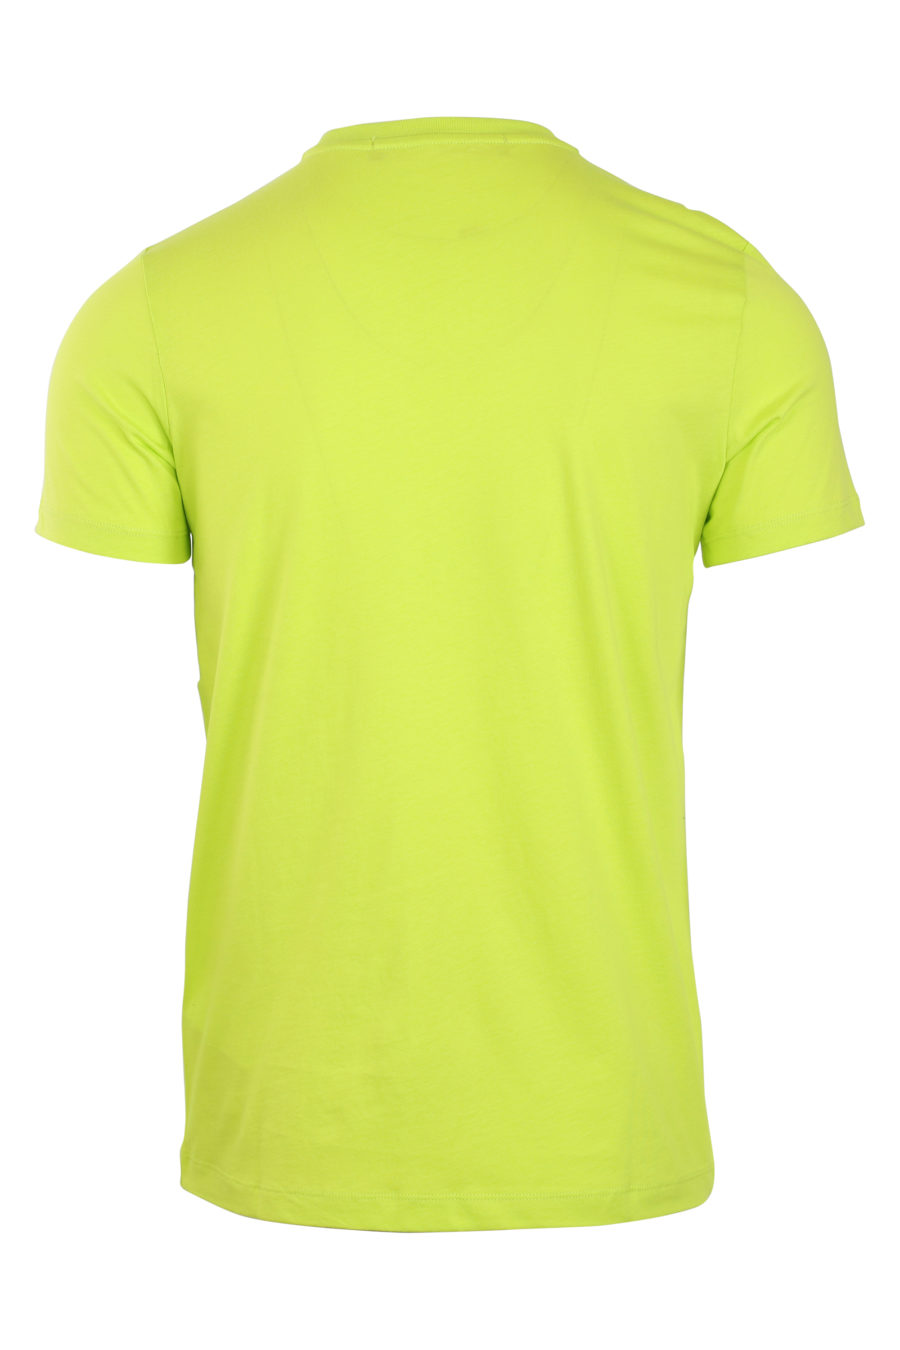 Camiseta verde lima con logo retro negro - IMG 0847